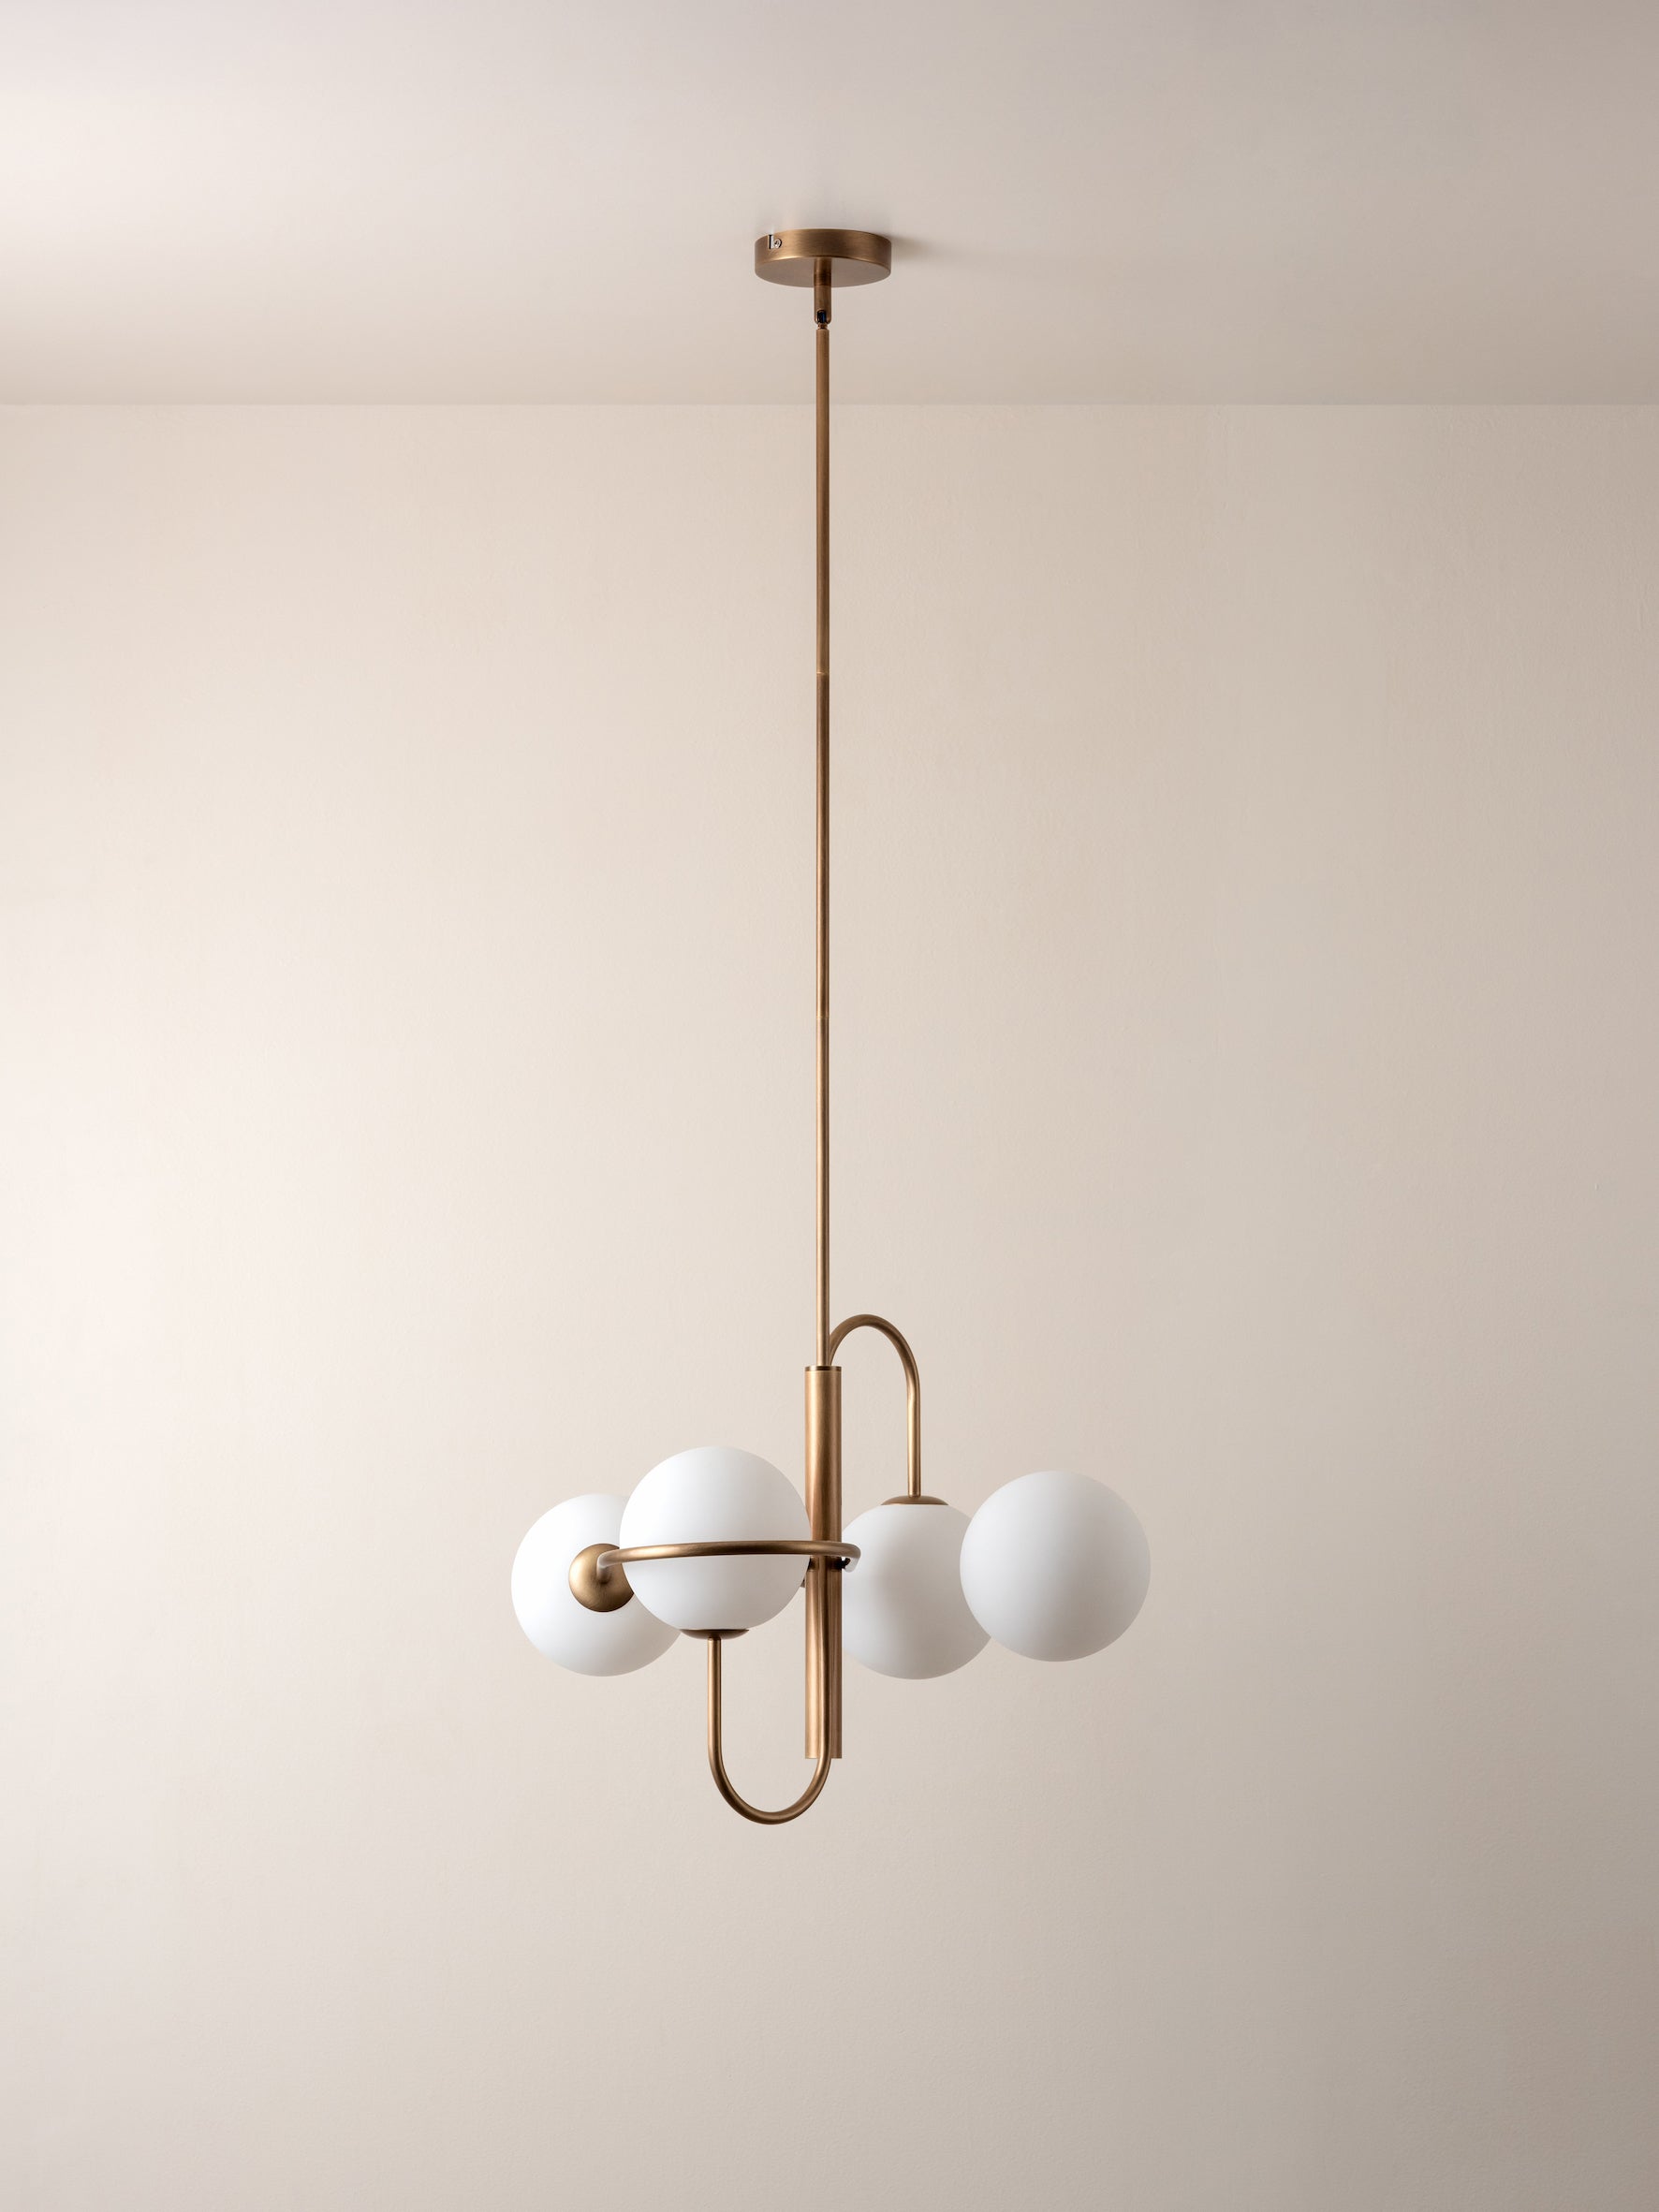 Decora - 4 light aged brass and opal pendant | Ceiling Light | Lights & Lamps Inc | Modern Affordable Designer Lighting | USA